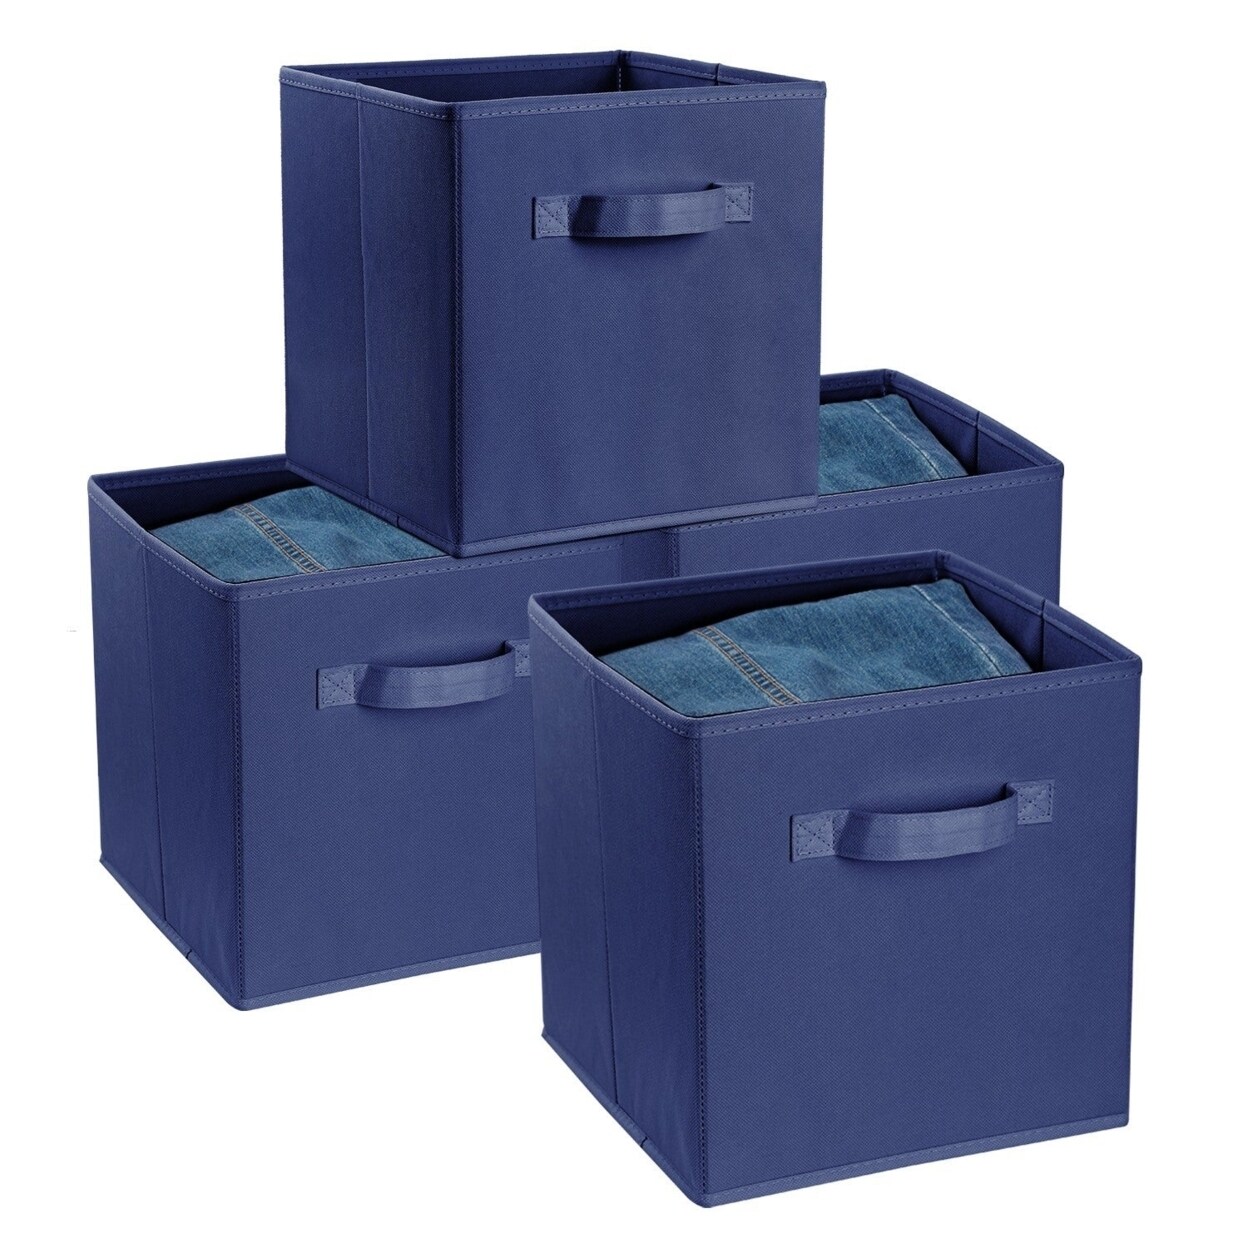 SKUSHOPS 4 Pack Foldable Storage Cube Bins Cloths Closet Space Organizer Basket Shelves Box